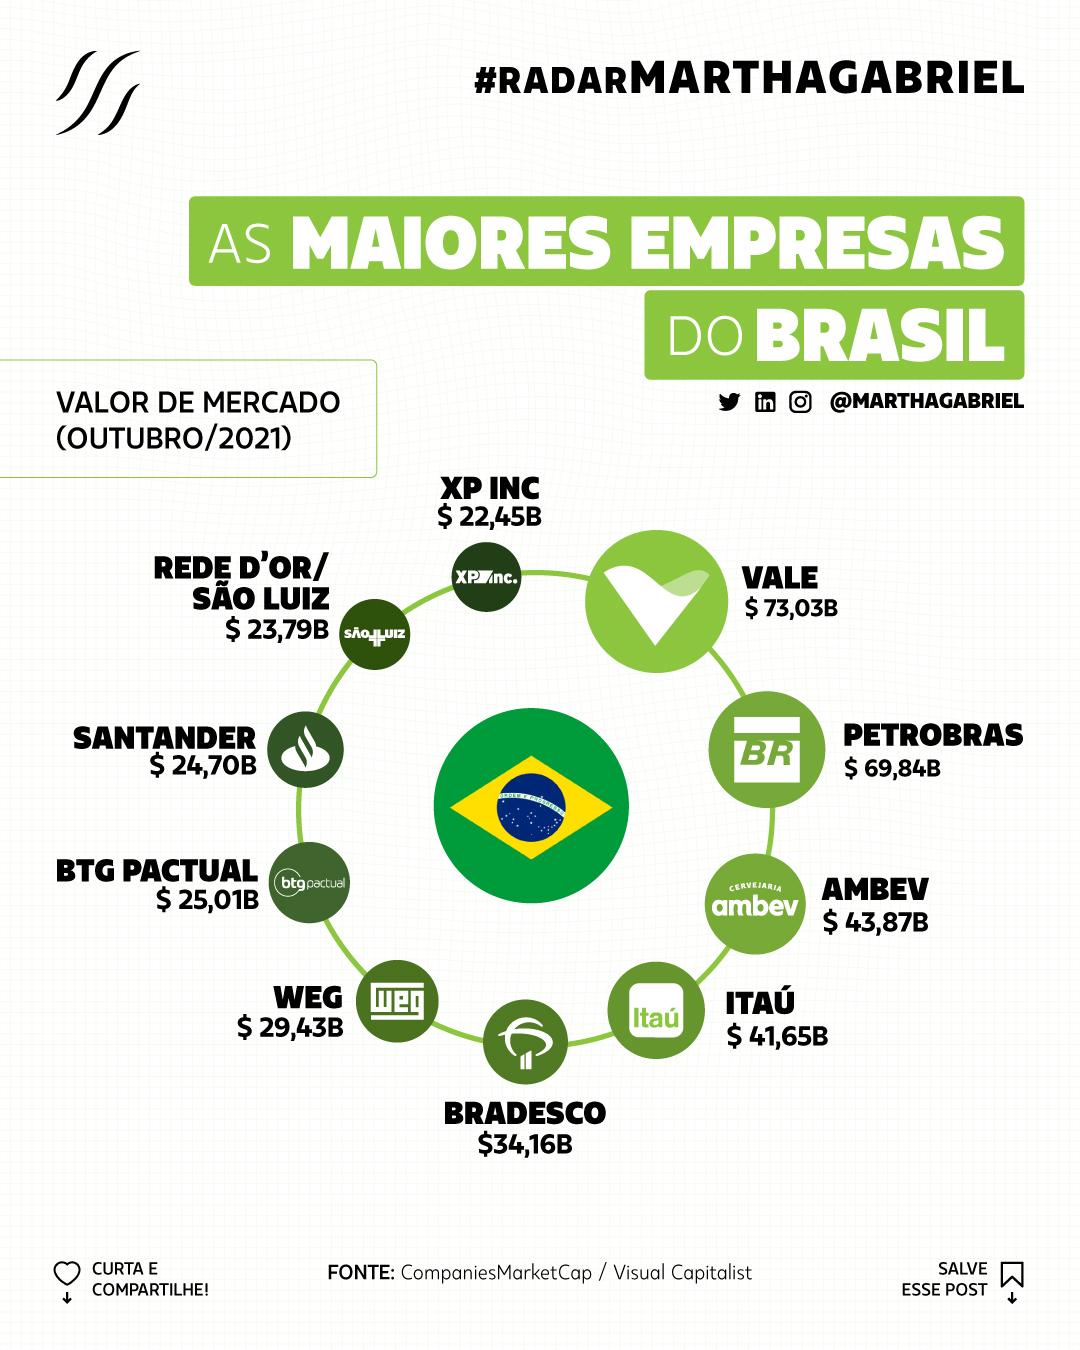 As maiores empresas do Brasil